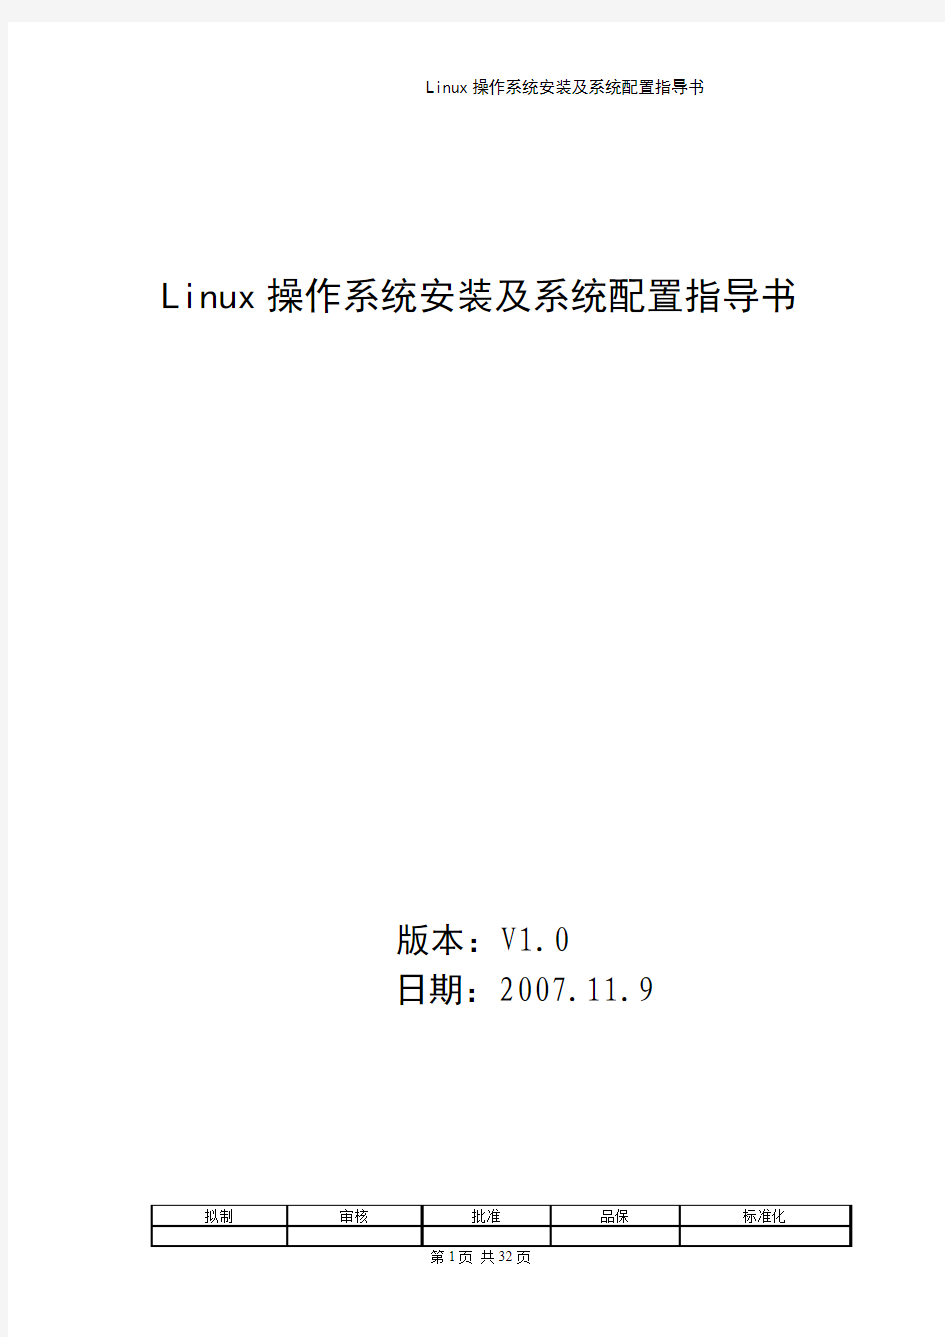 Linux操作系统安装及配置作业指导书